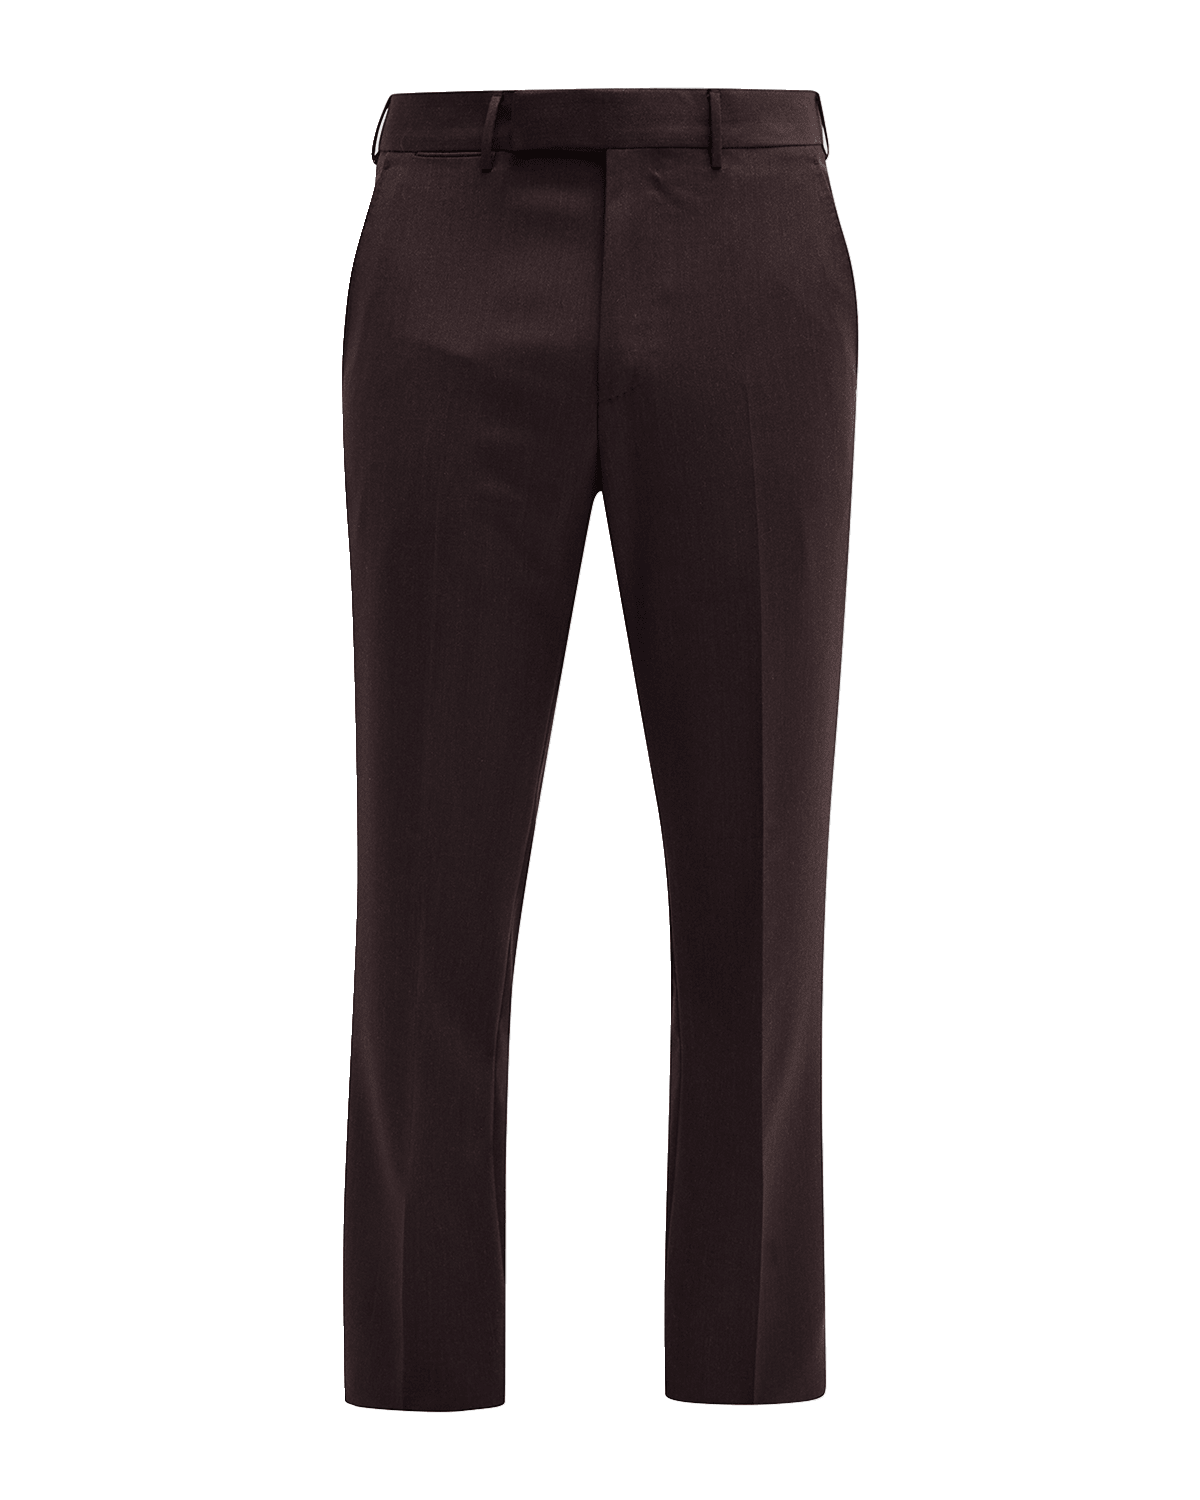 Emporio Armani Men's Cotton Stretch 5-Pocket Pants | Neiman Marcus